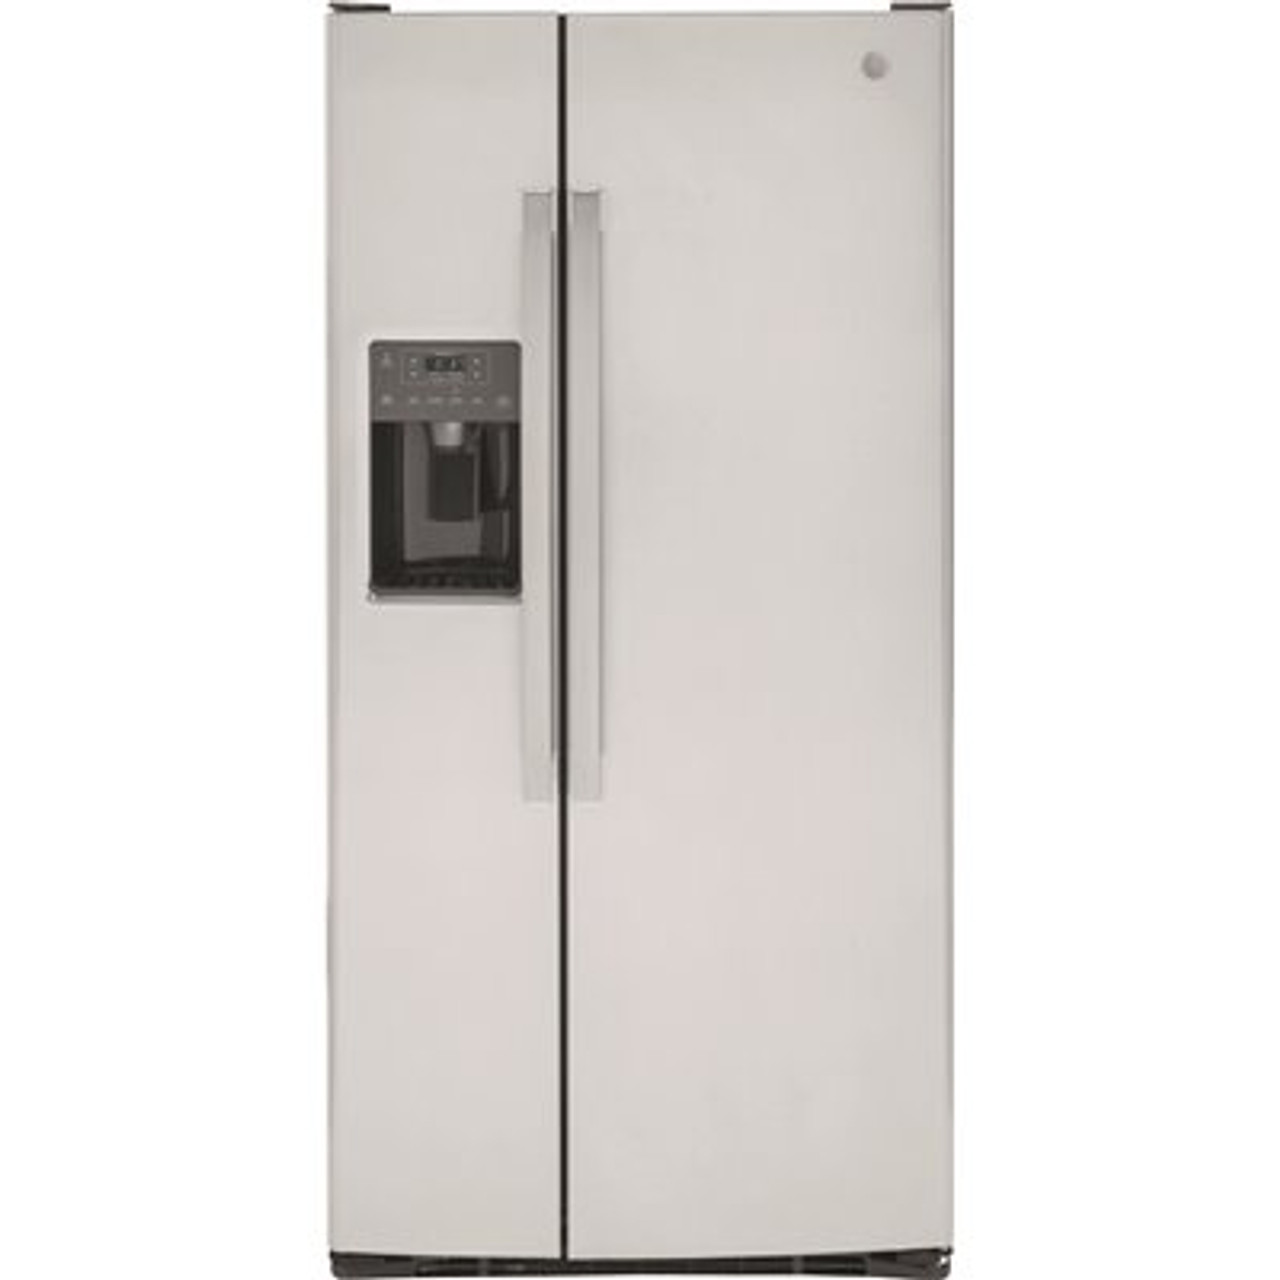 Ge 23.0 Cu. Ft. Side By Side Refrigerator In Fingerprint Resistant Stainless Steel, Standard Depth